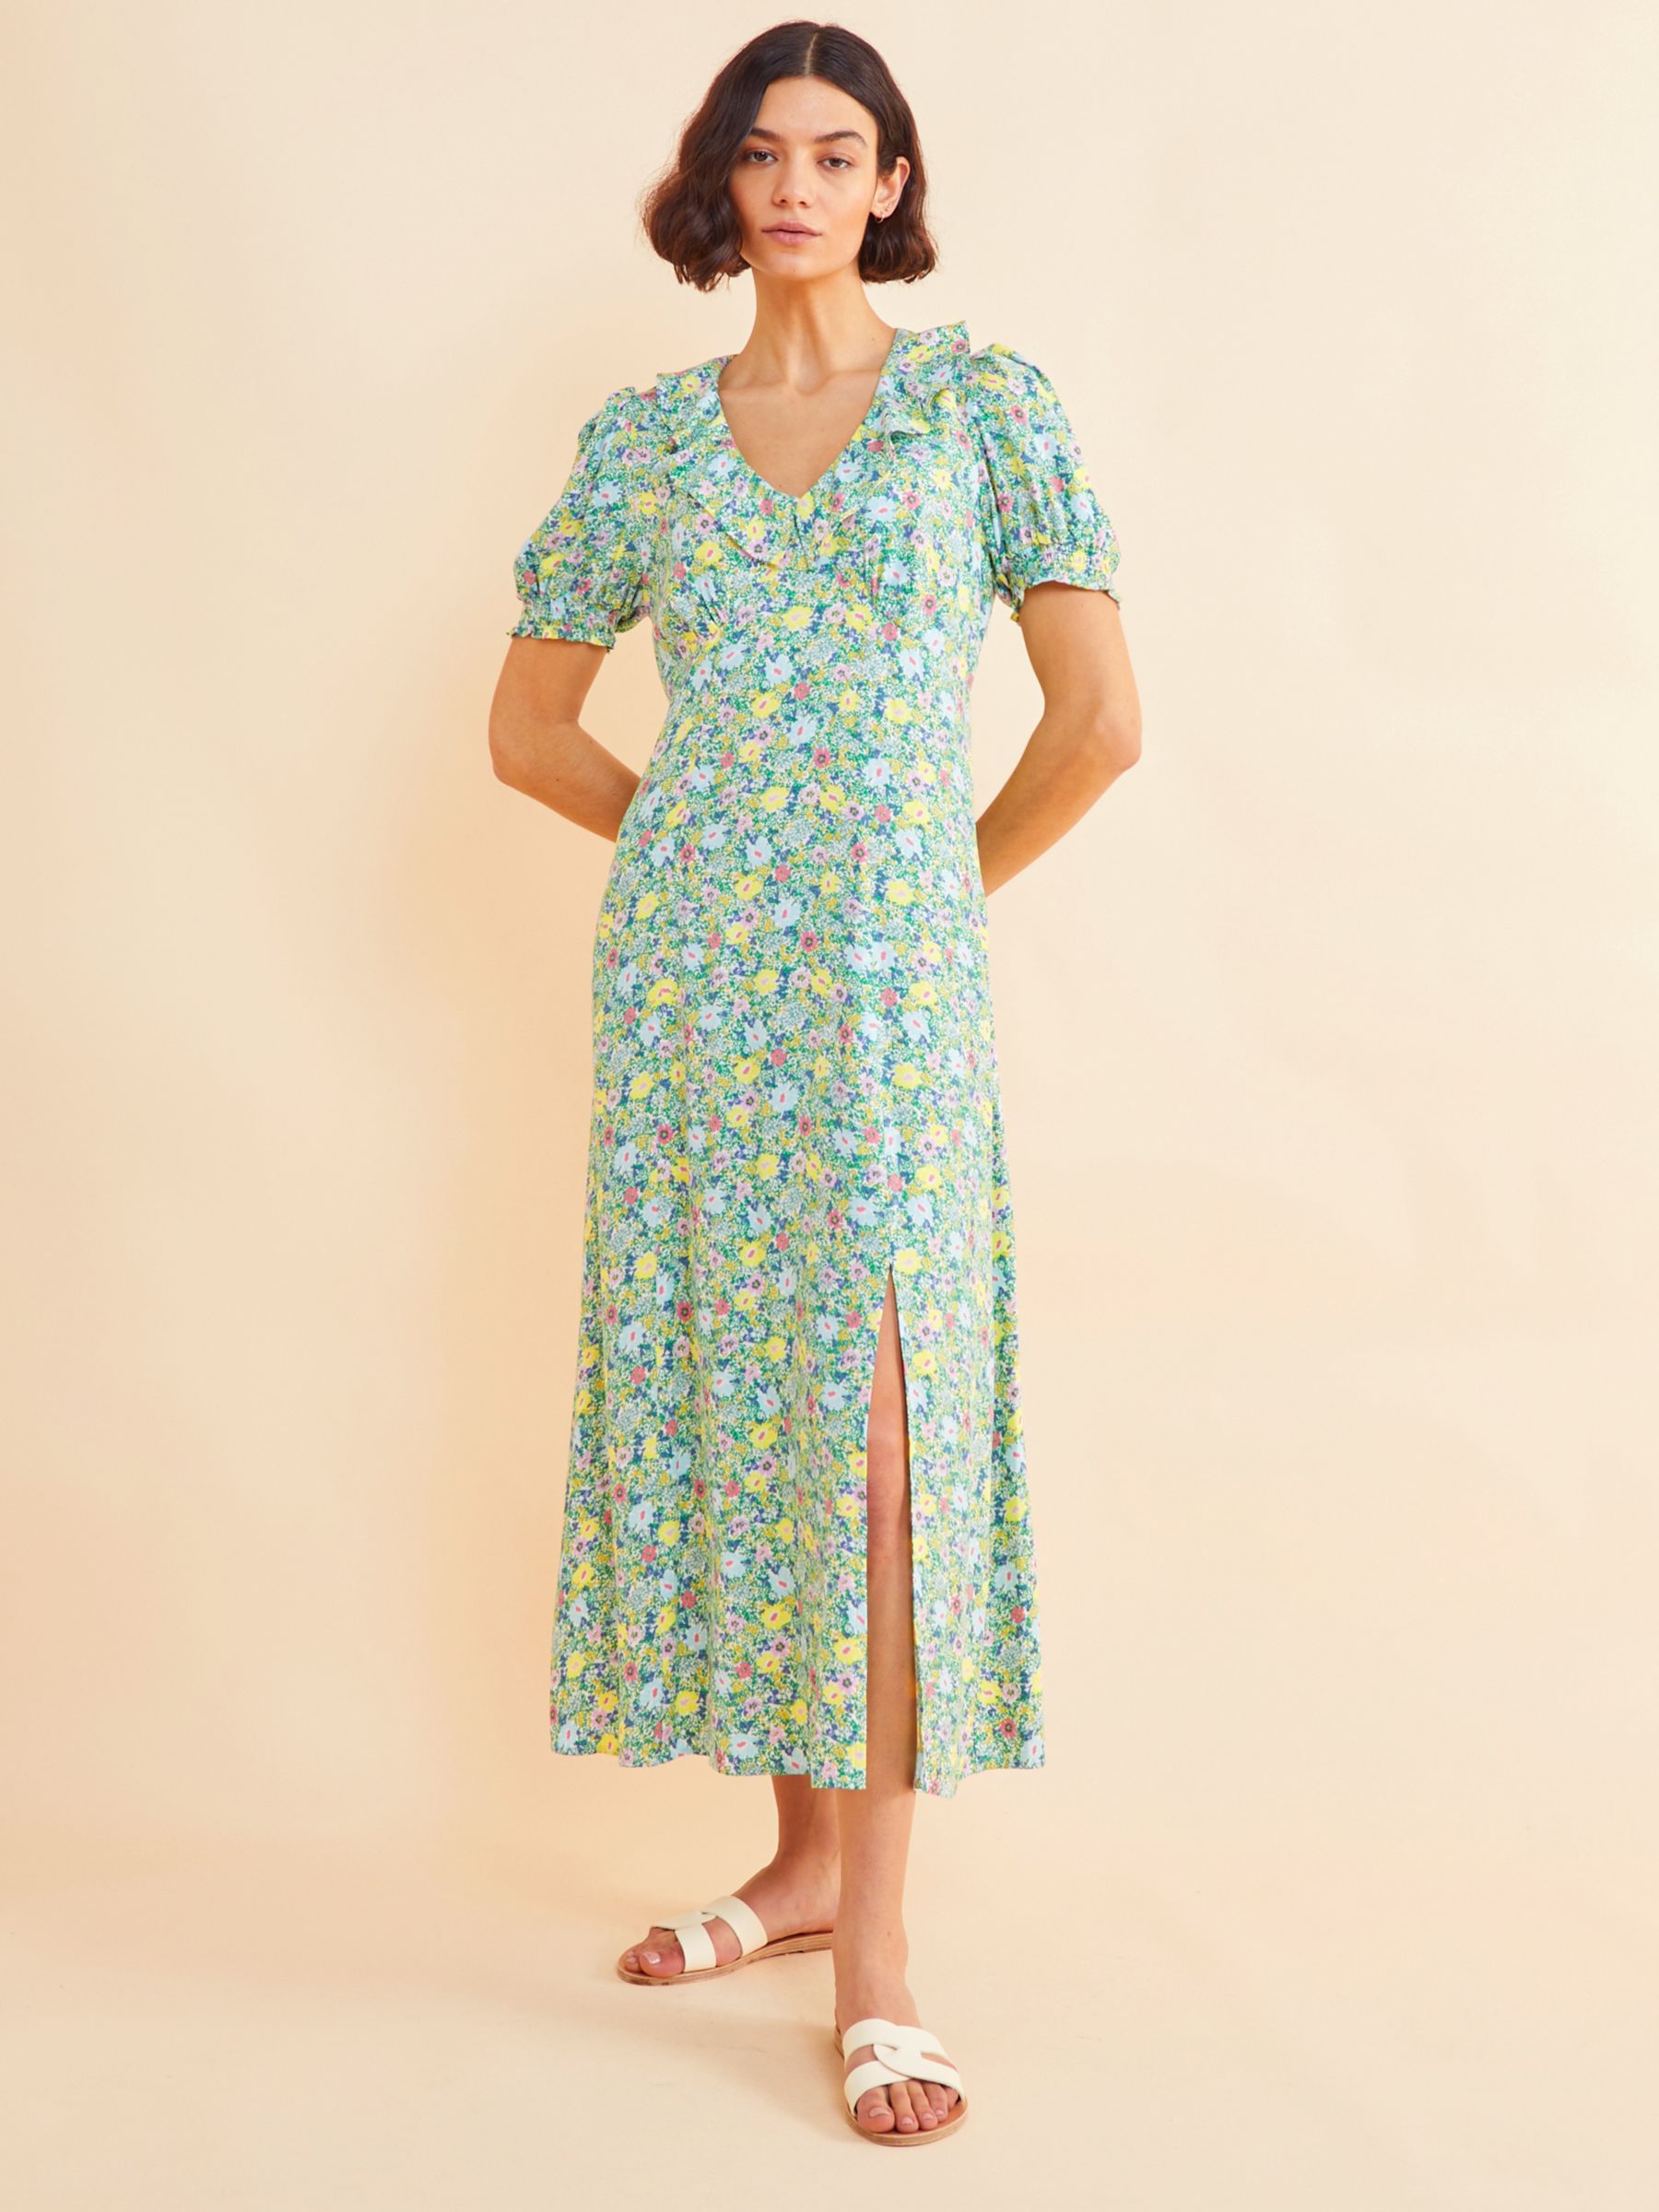 Daisy Print Dresses | John Lewis & Partners